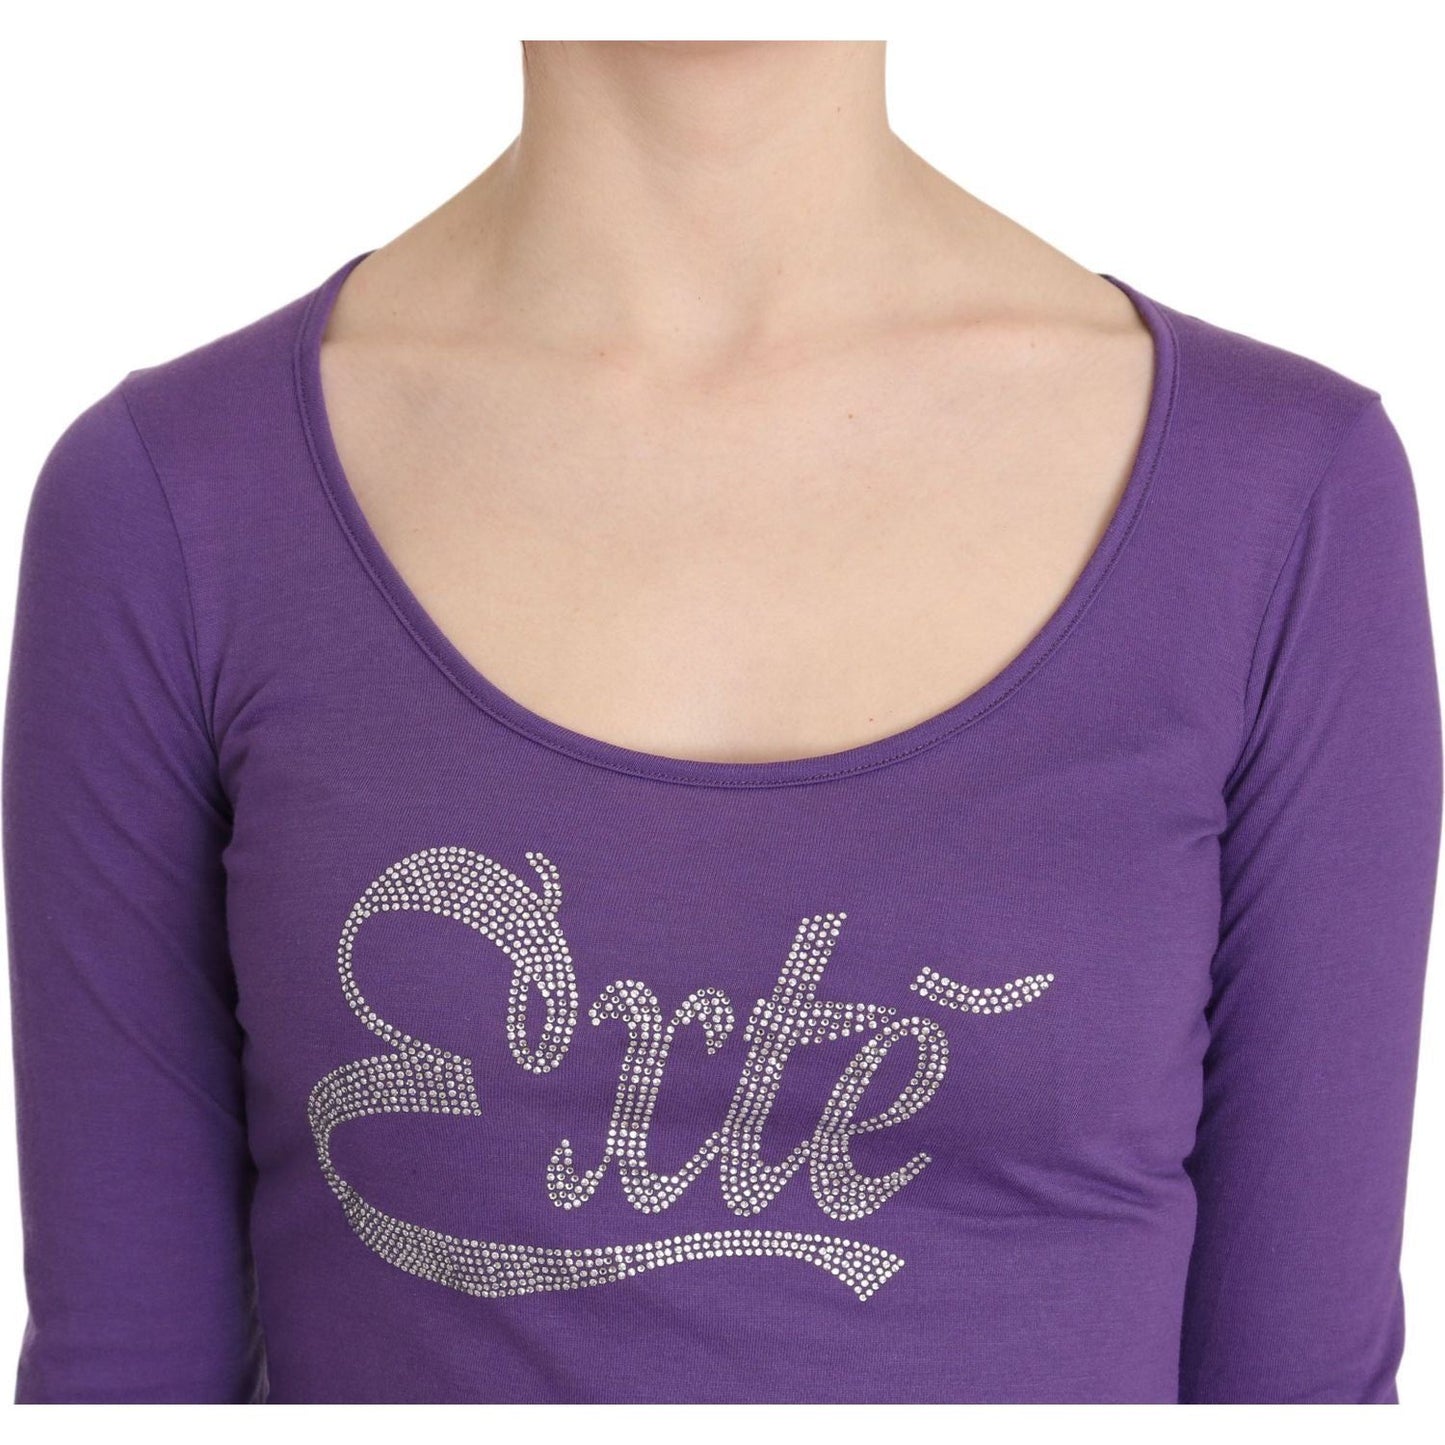 Exte Elegant Purple Crystal Embellished Long Sleeve Top purple-exte-crystal-embellished-long-sleeve-top-blouse